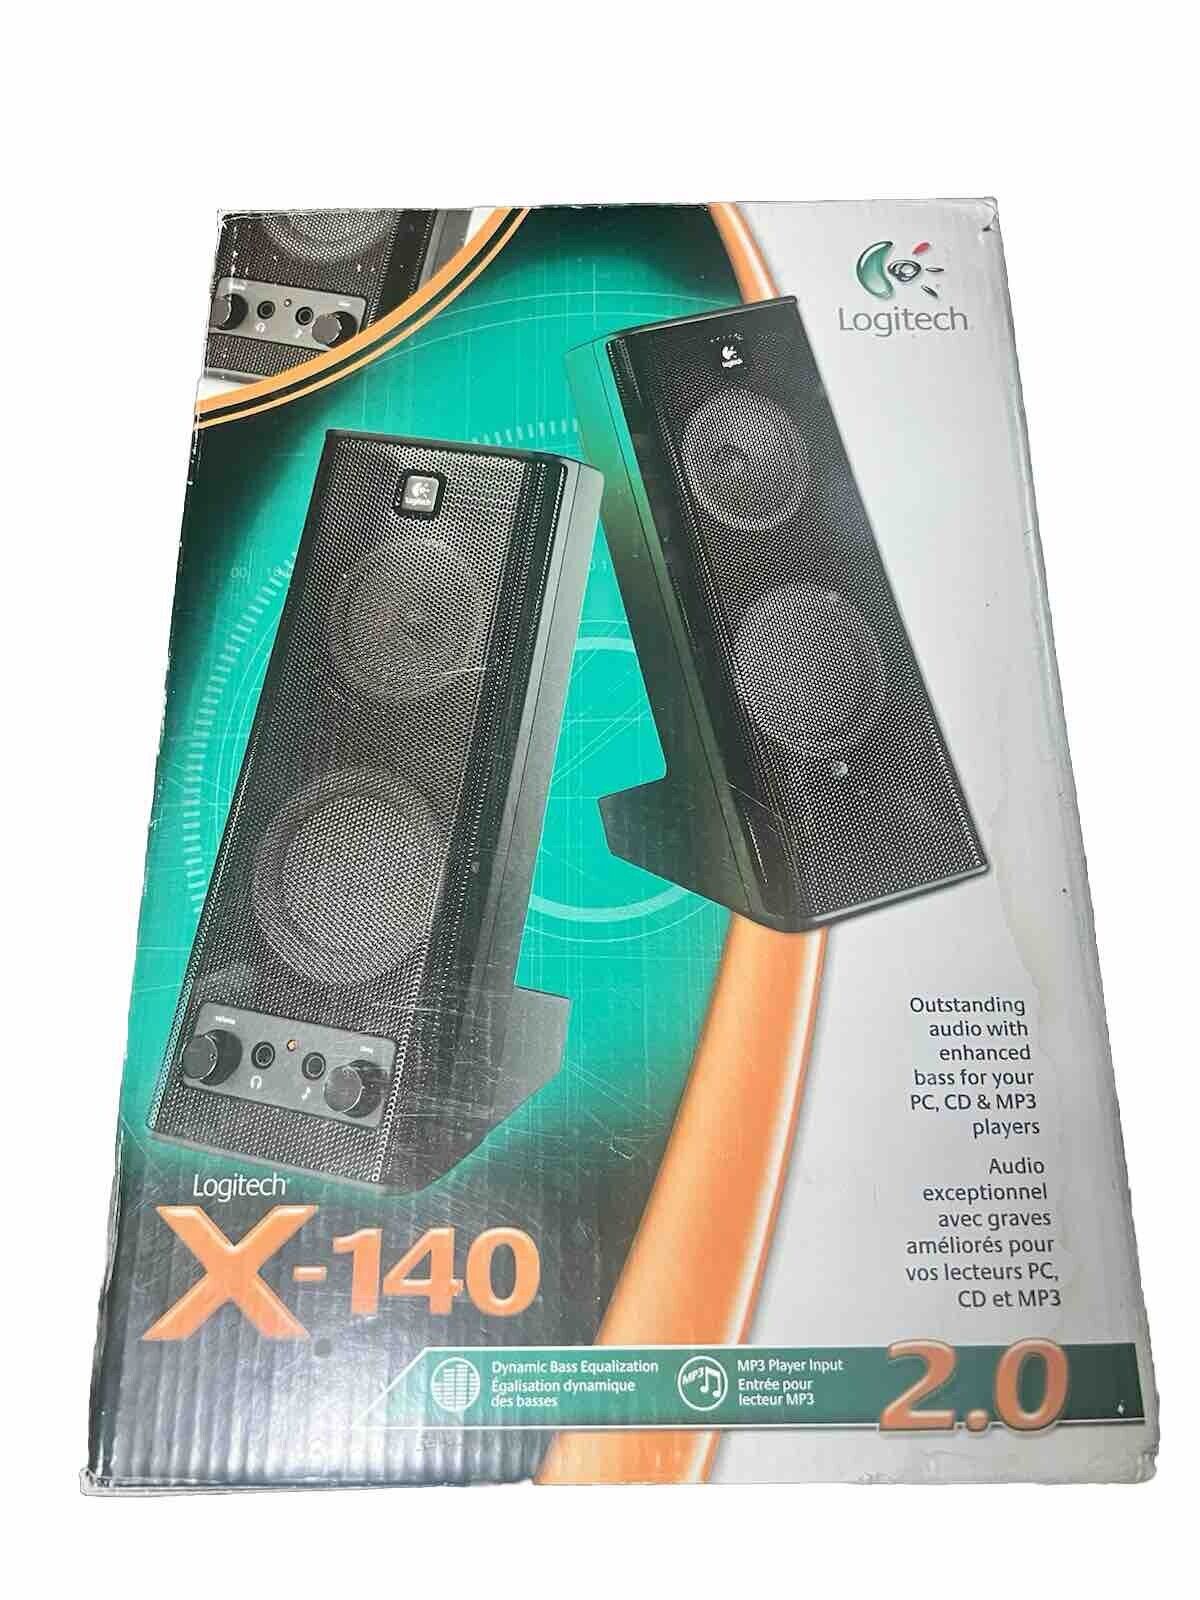 Logitech X-140 Computer Speakers